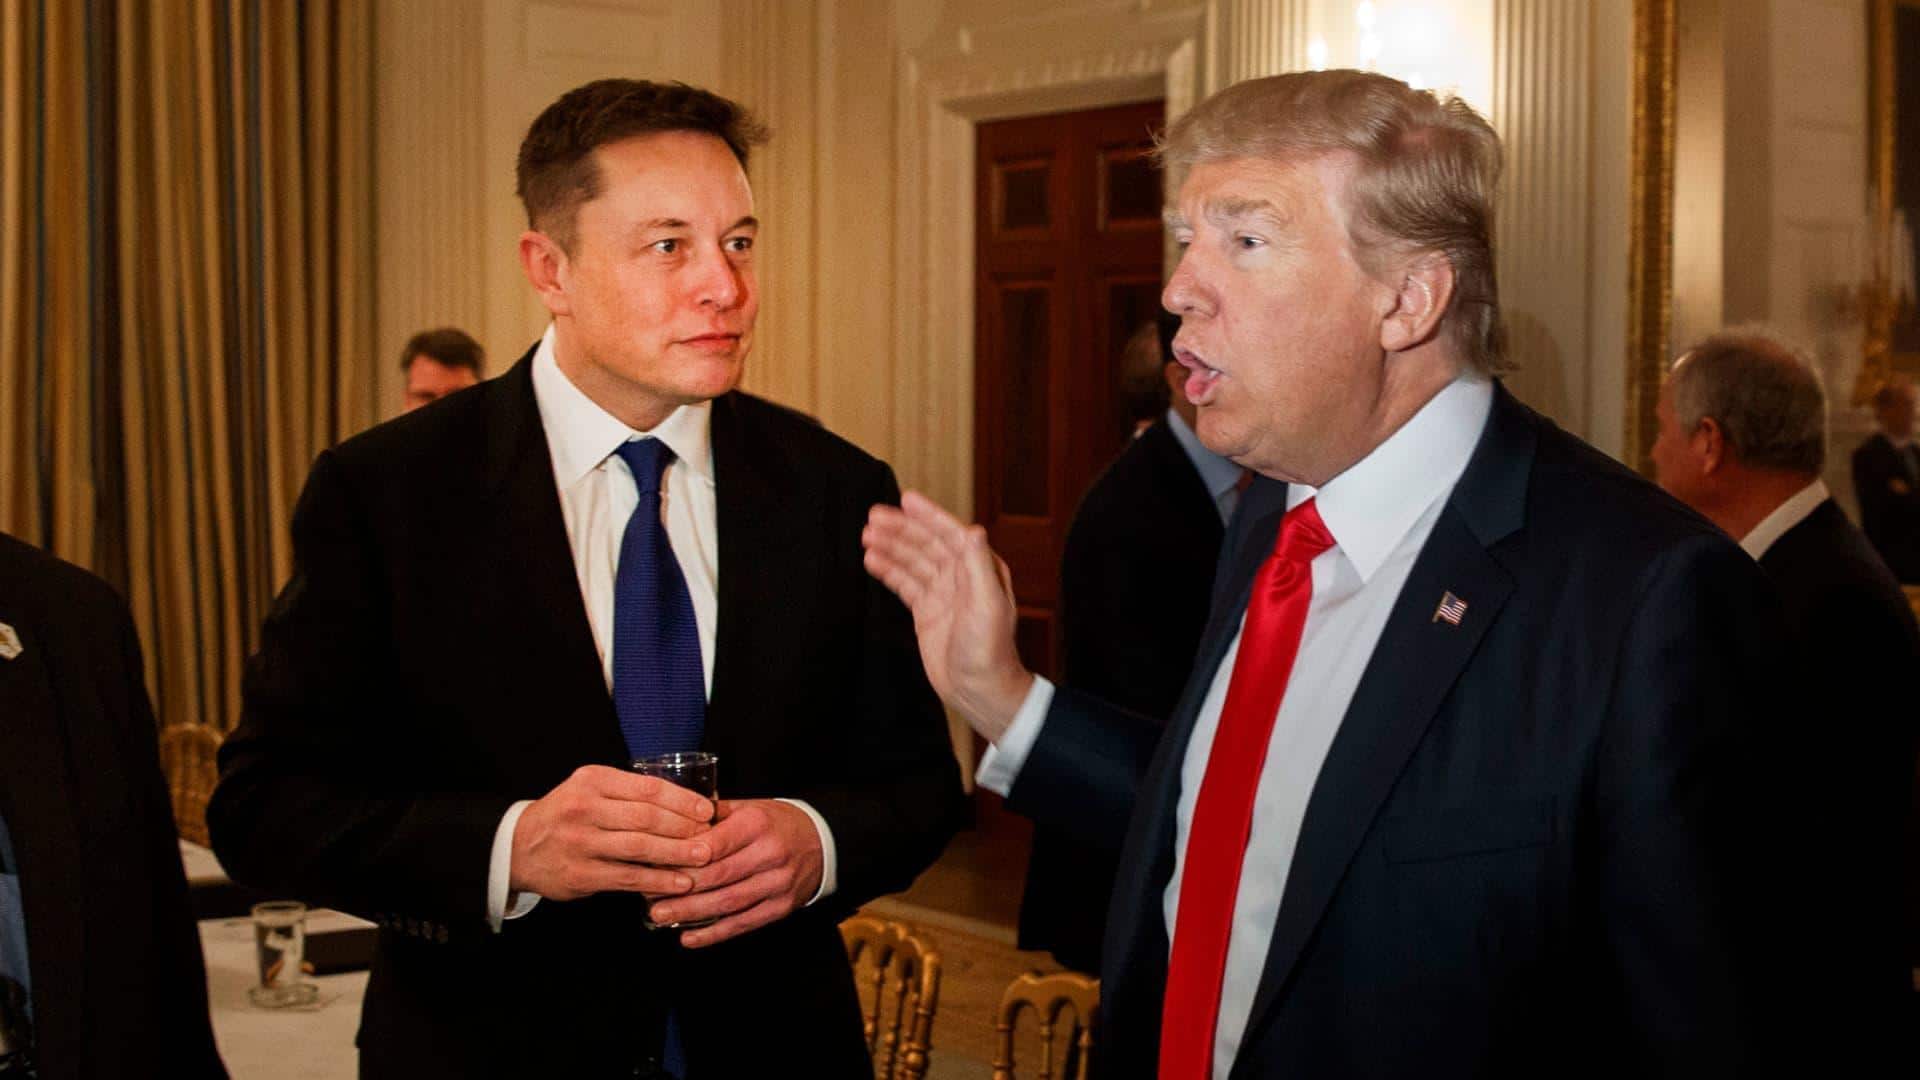 Trump tried selling his 'Truth Social' platform to Elon Musk